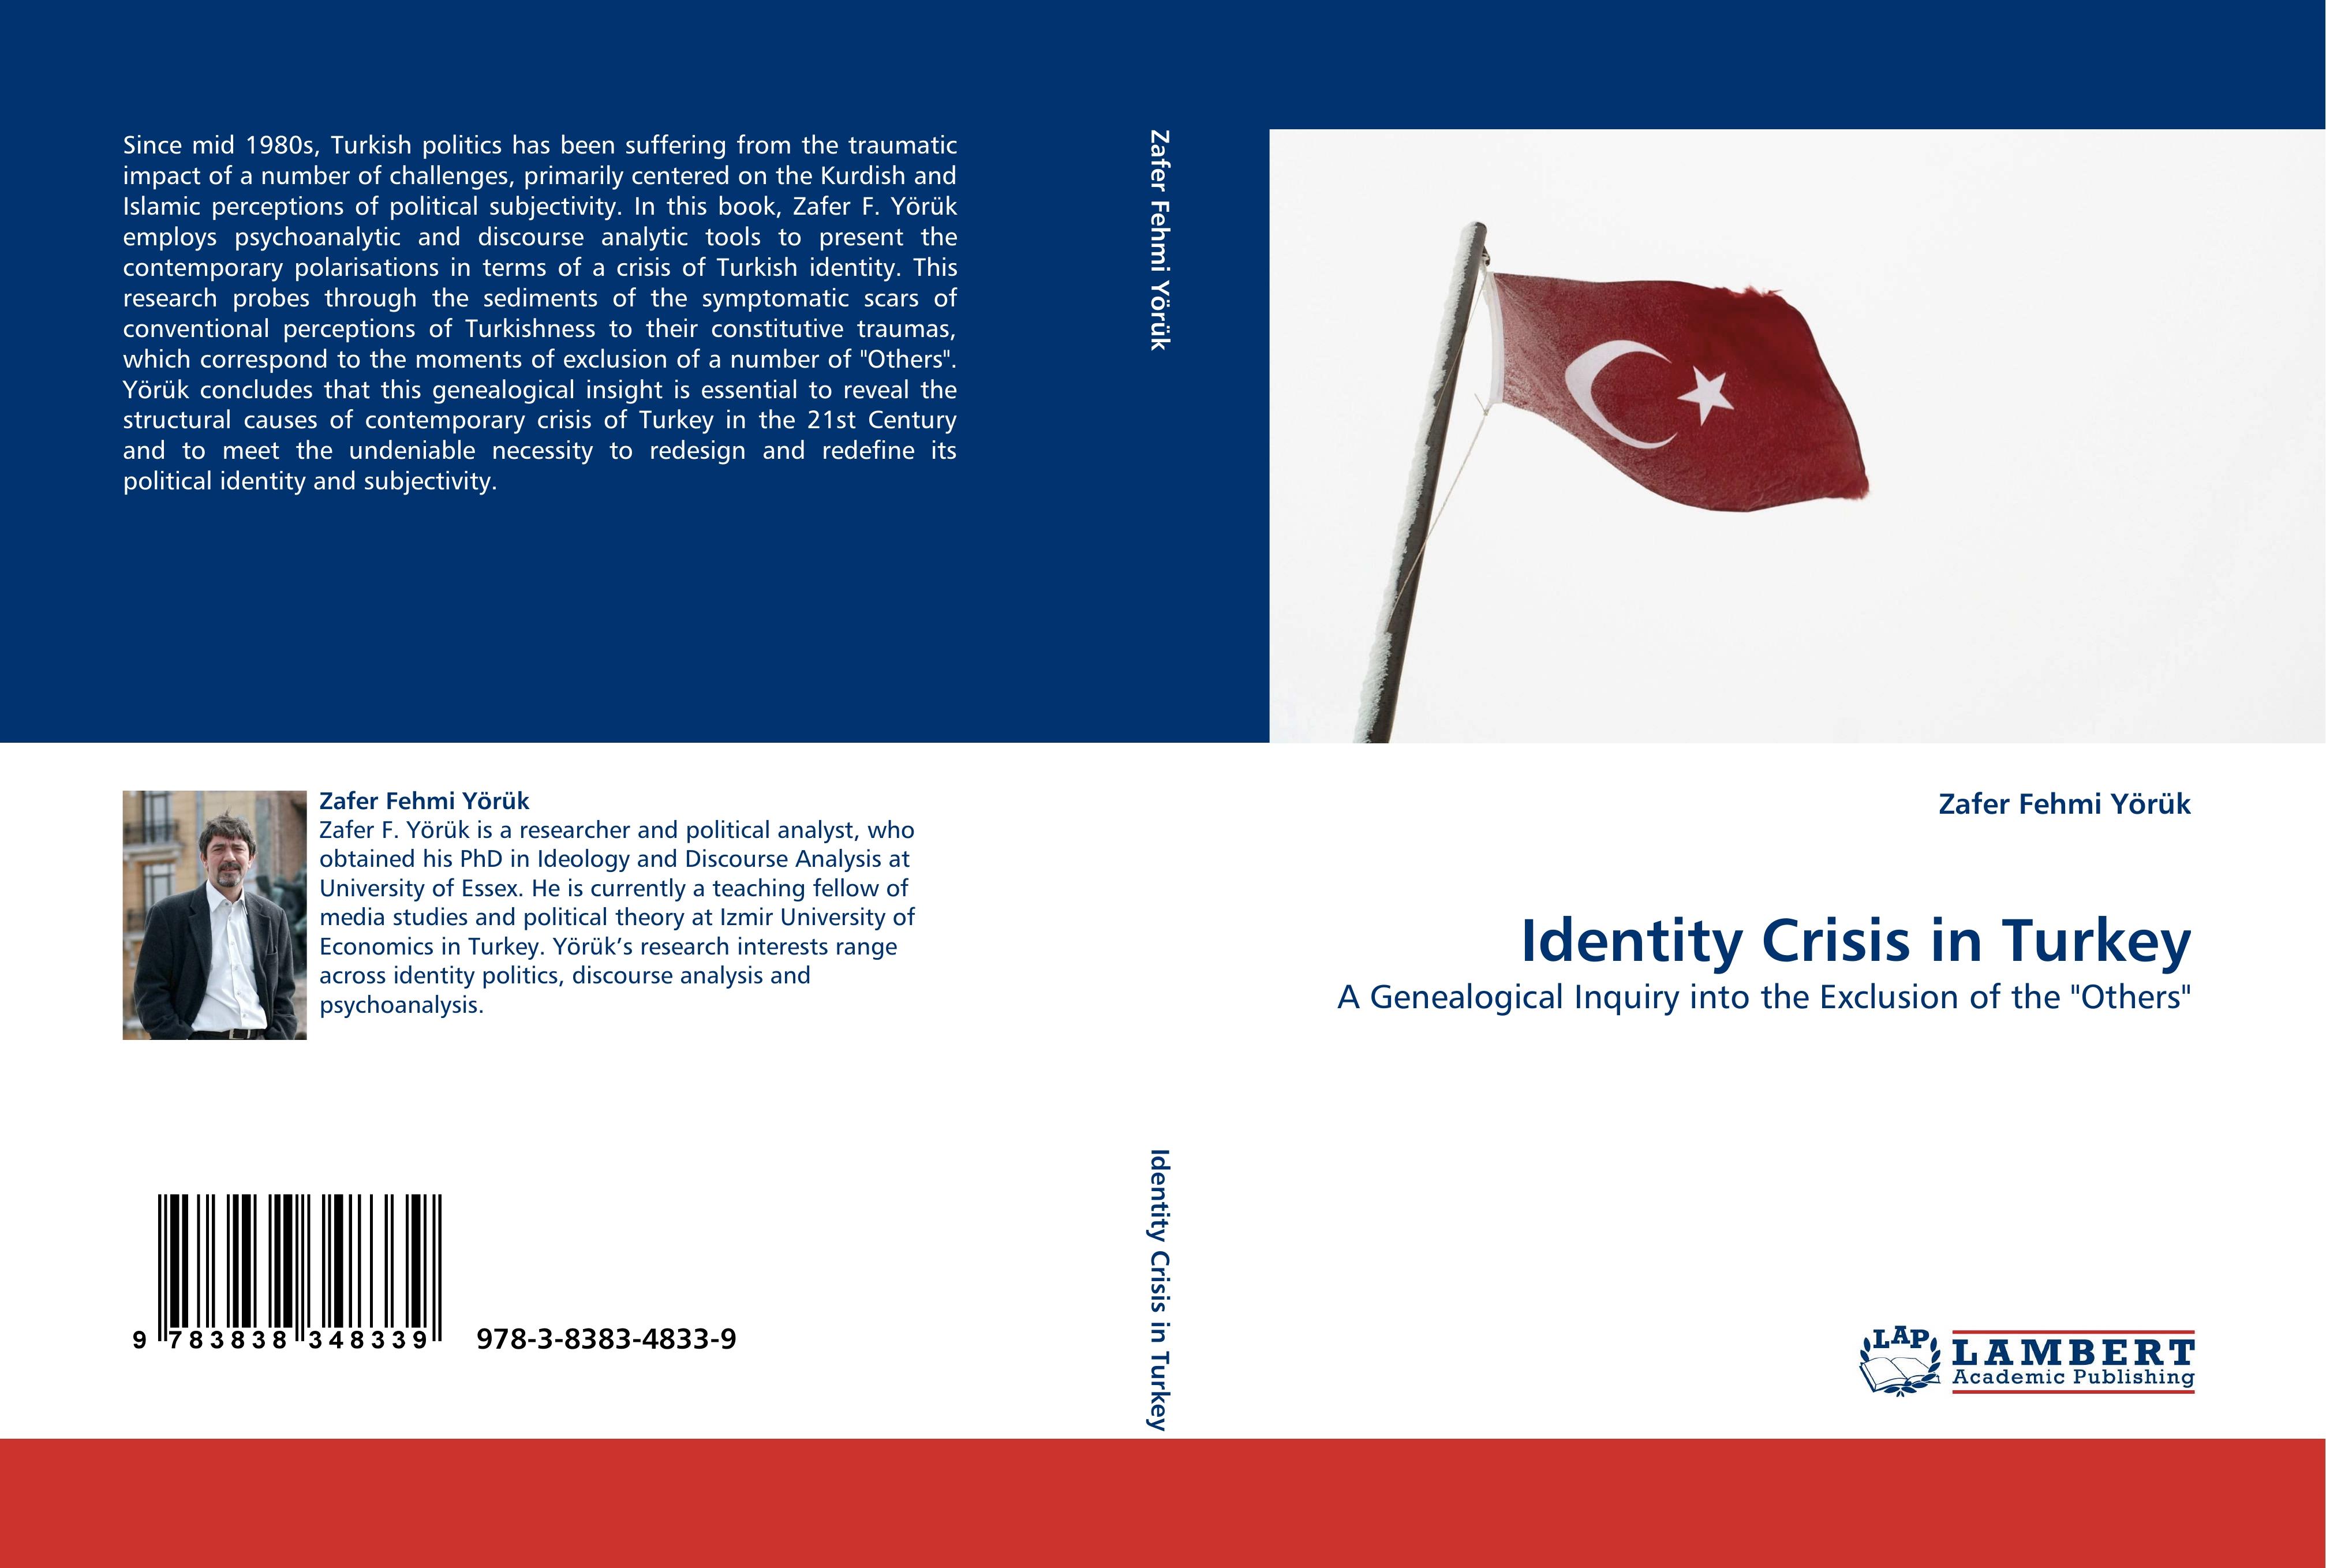 Identity Crisis in Turkey - Zafer Fehmi Yoeruek